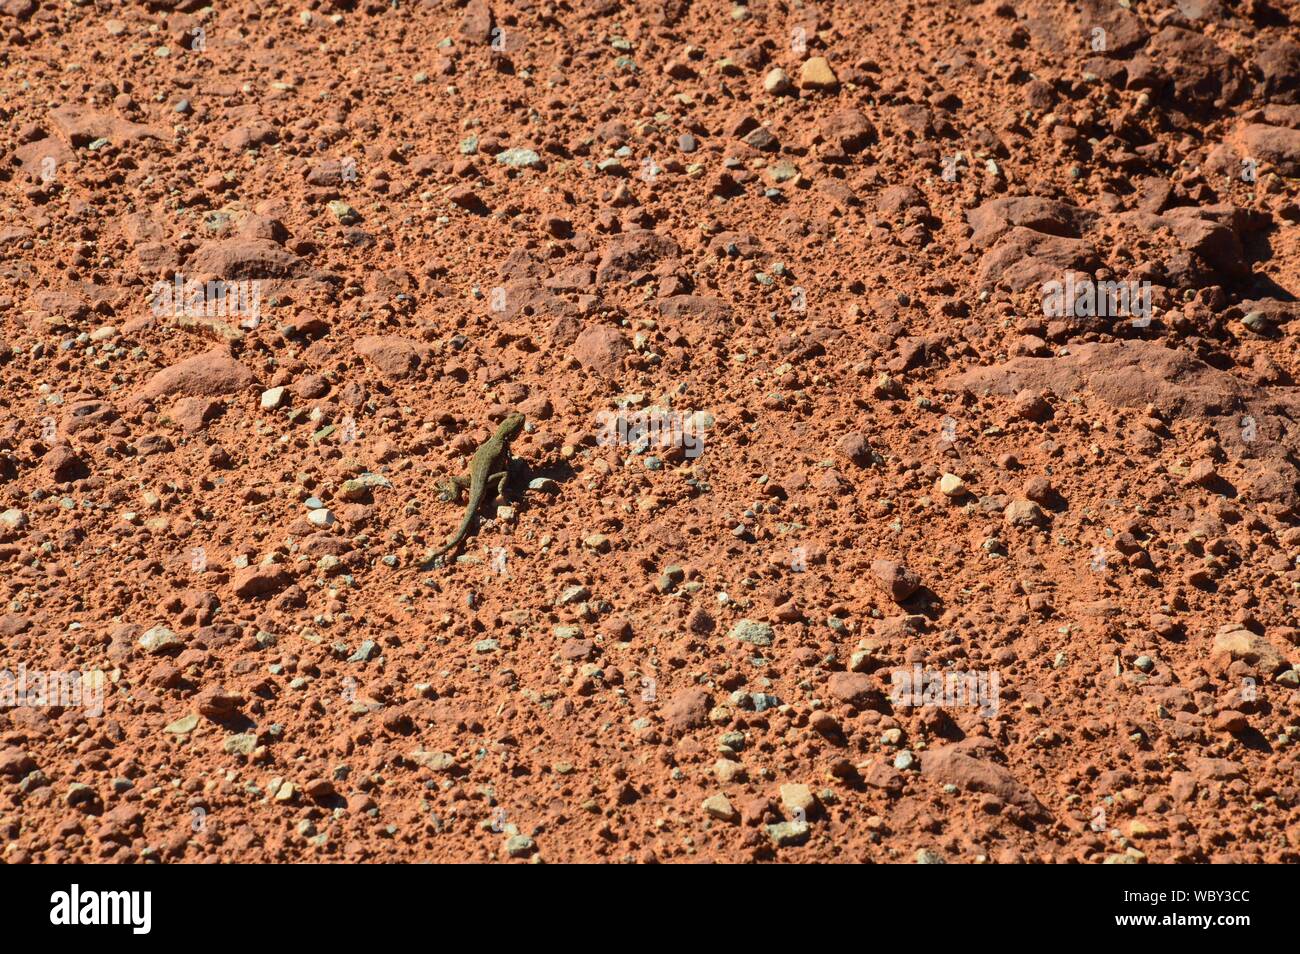 small lizard in the desert of Colorado, Stock Photo